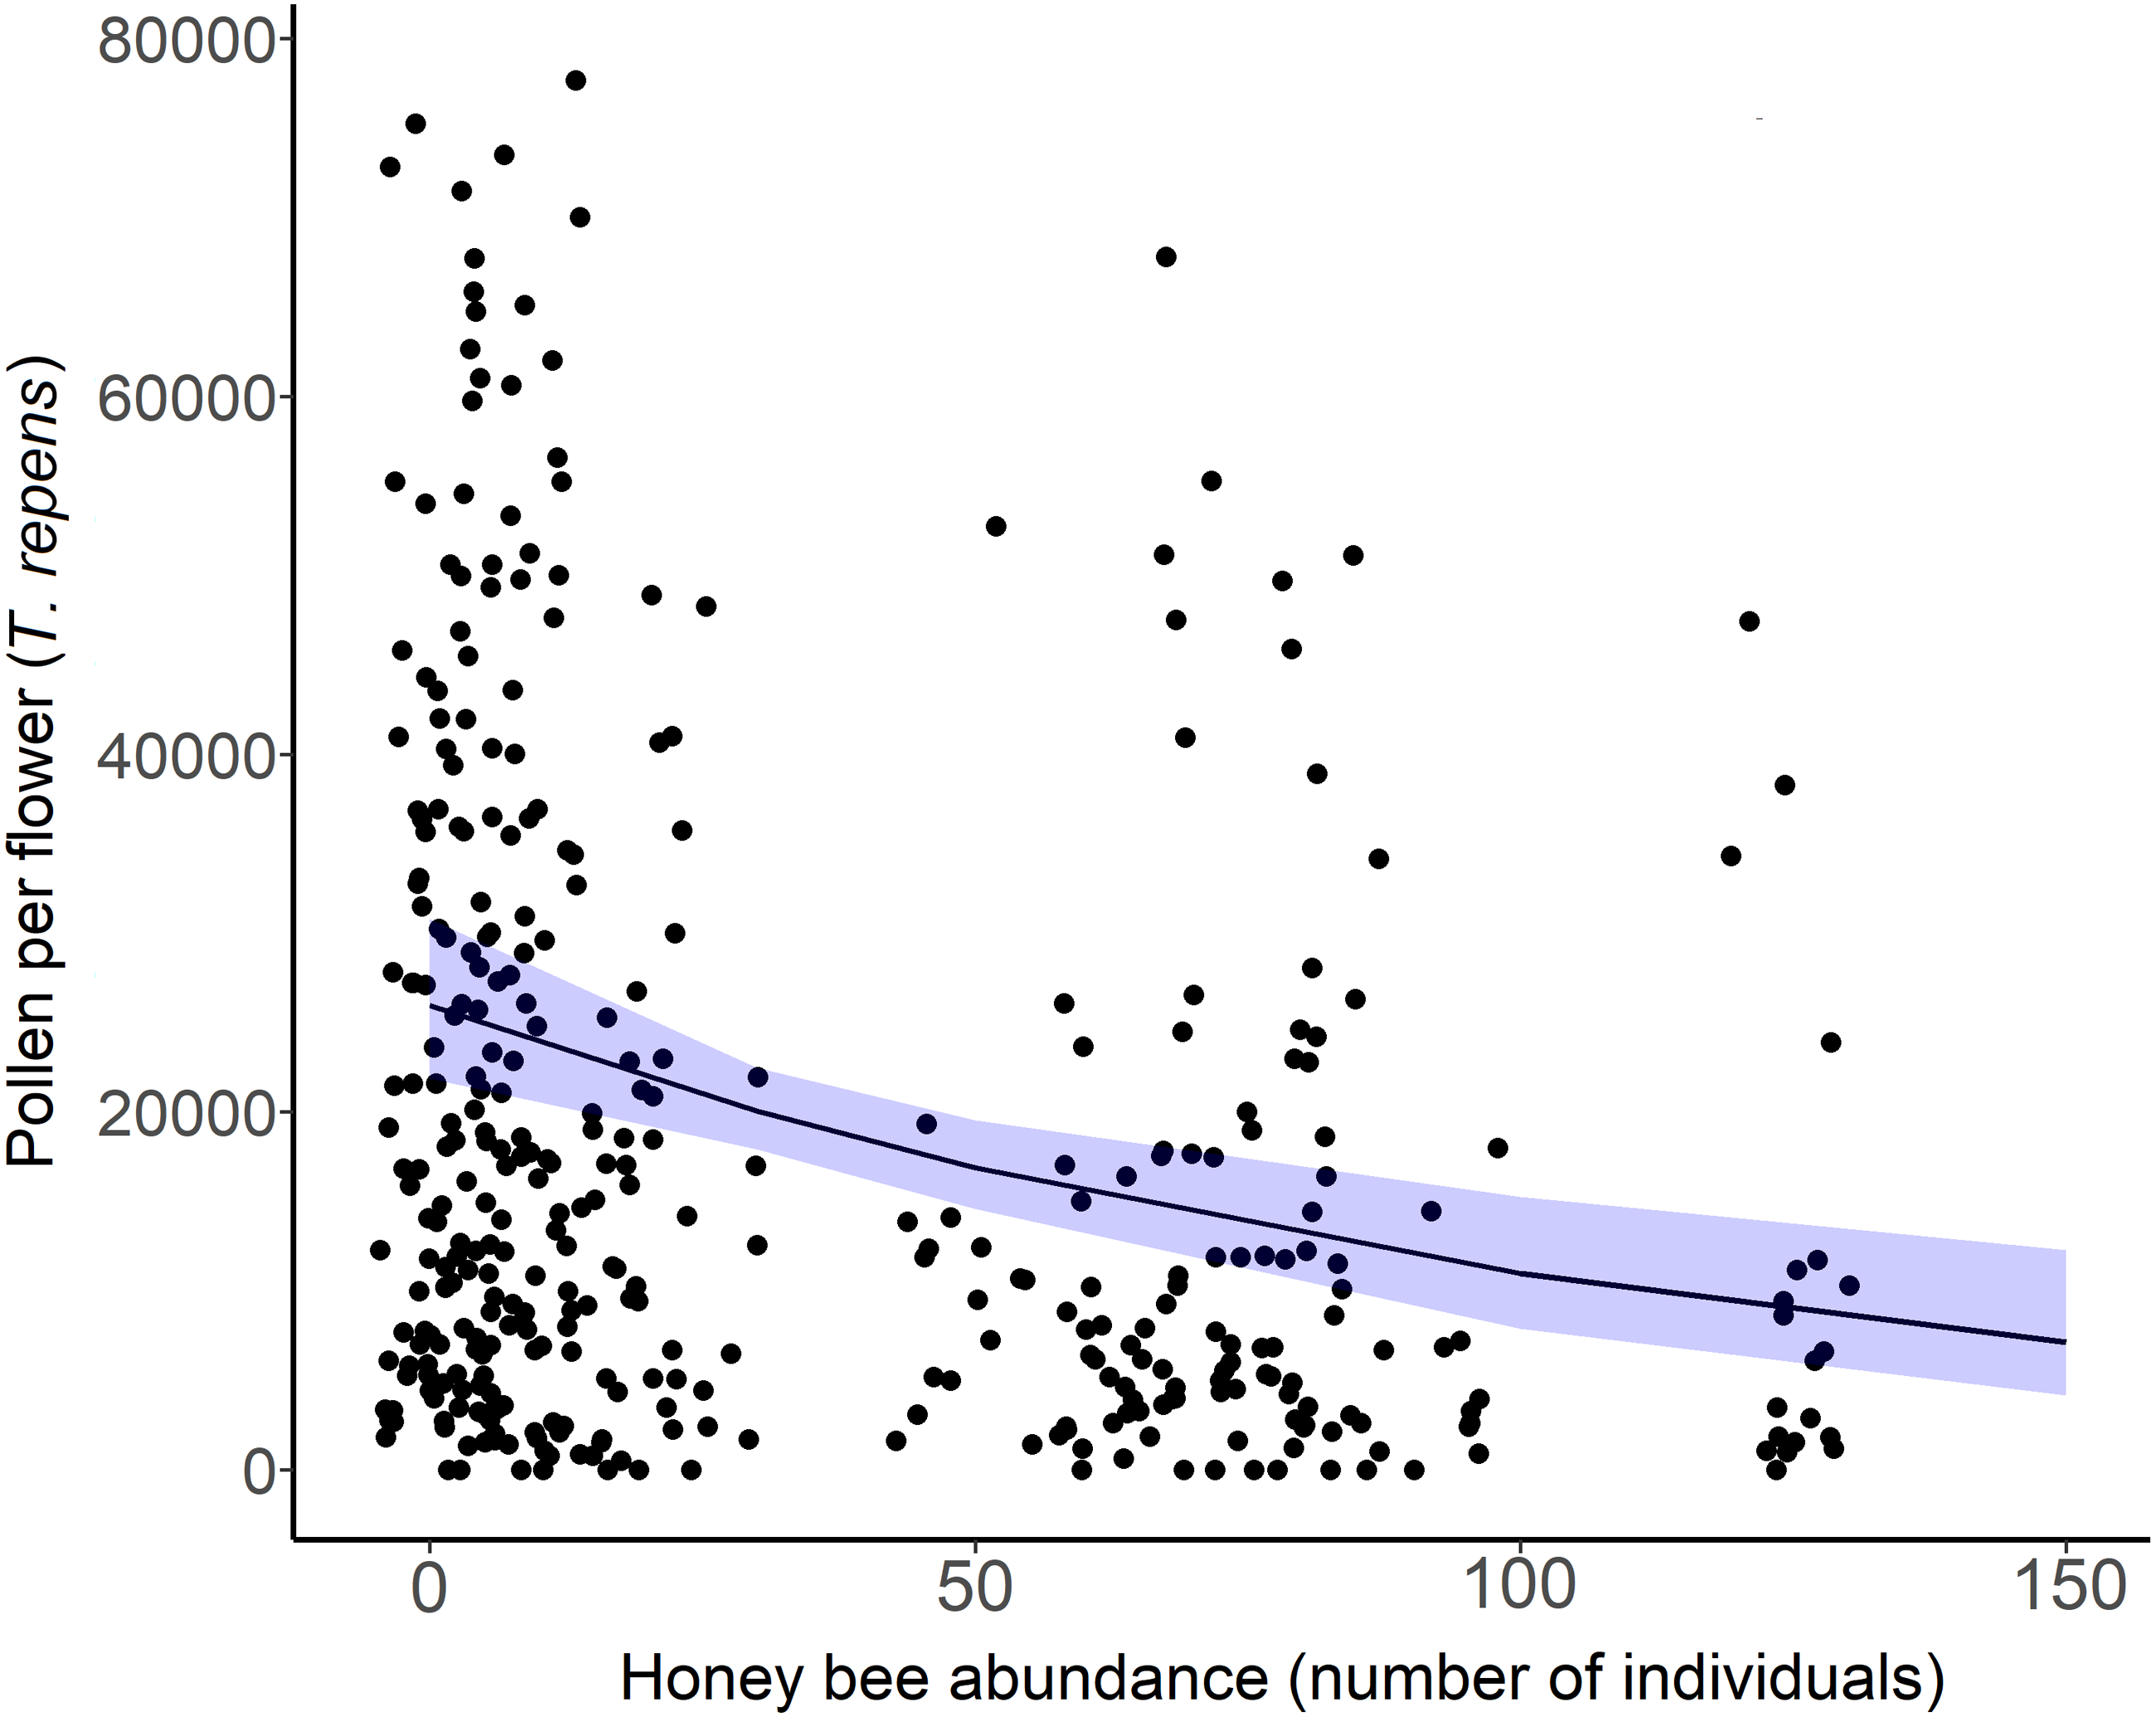 Bees Gone Wild - Scientific American Blog Network